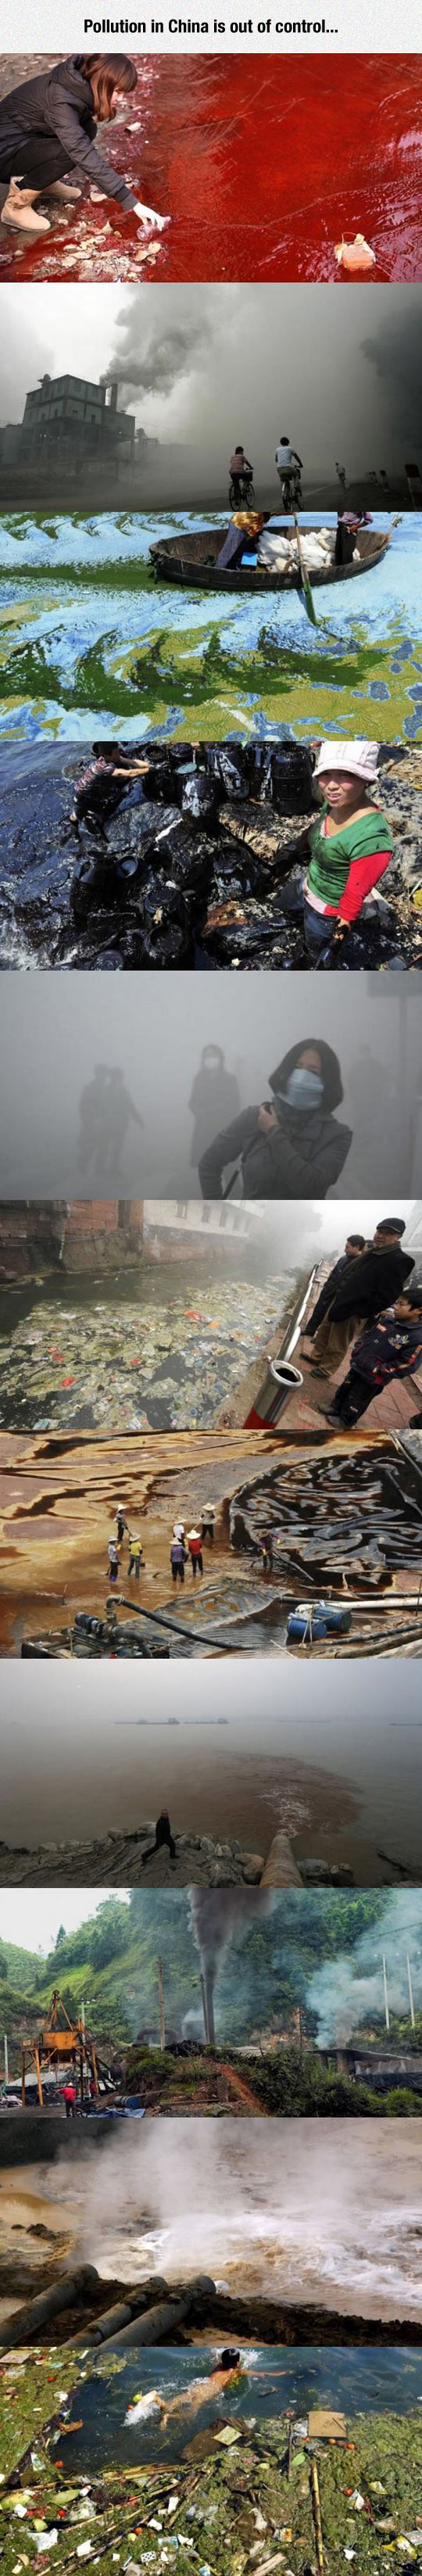 funny-China-pollution-river-trash-smoke-factory